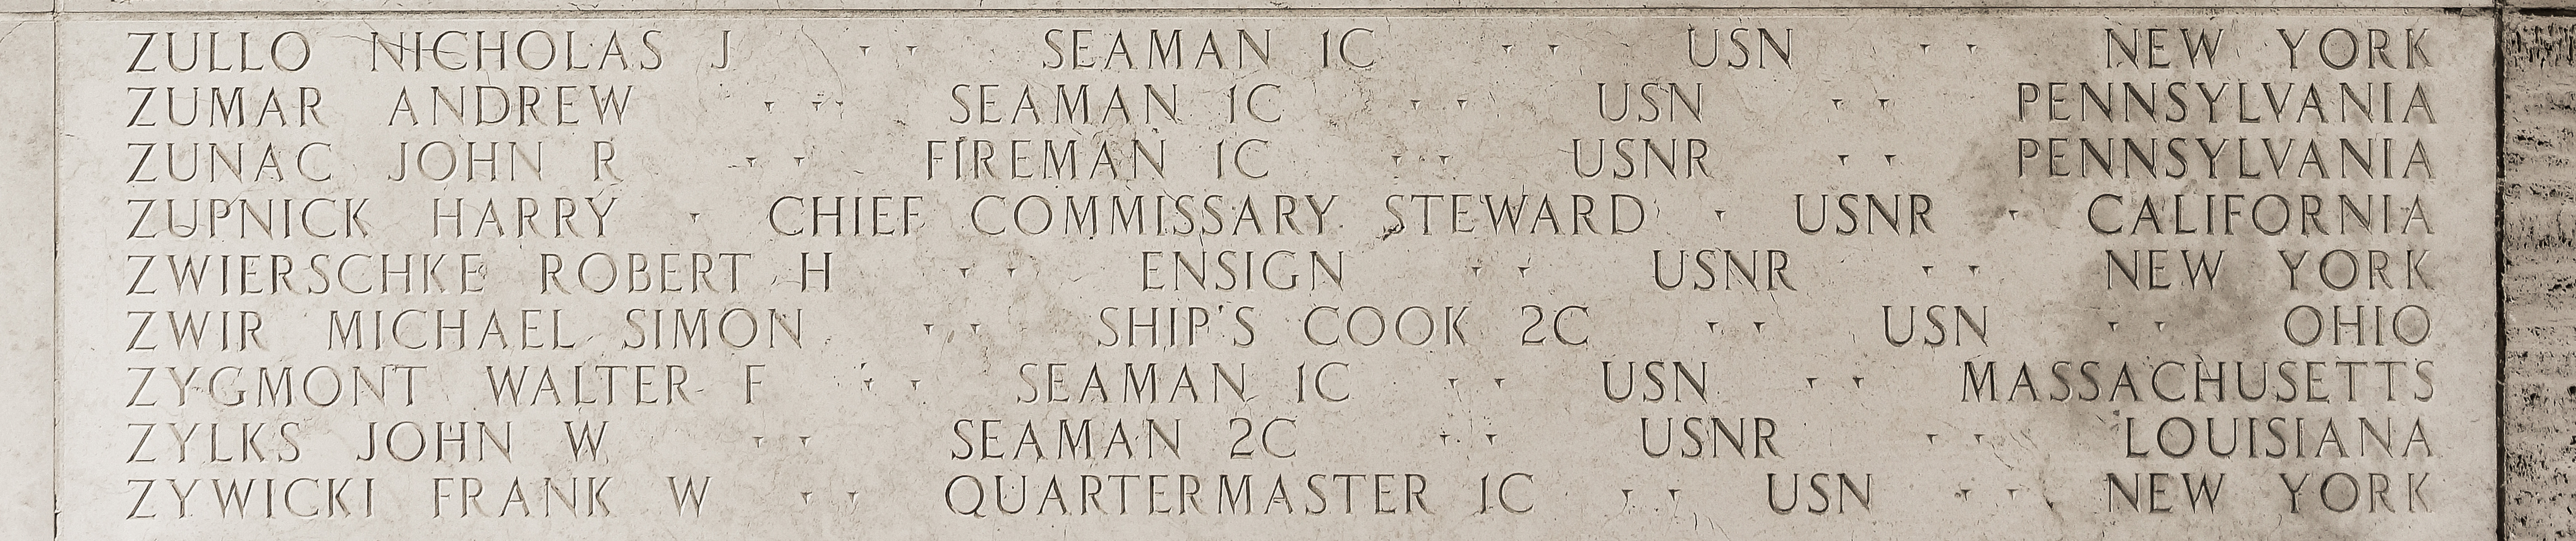 Walter F. Zygmont, Seaman First Class